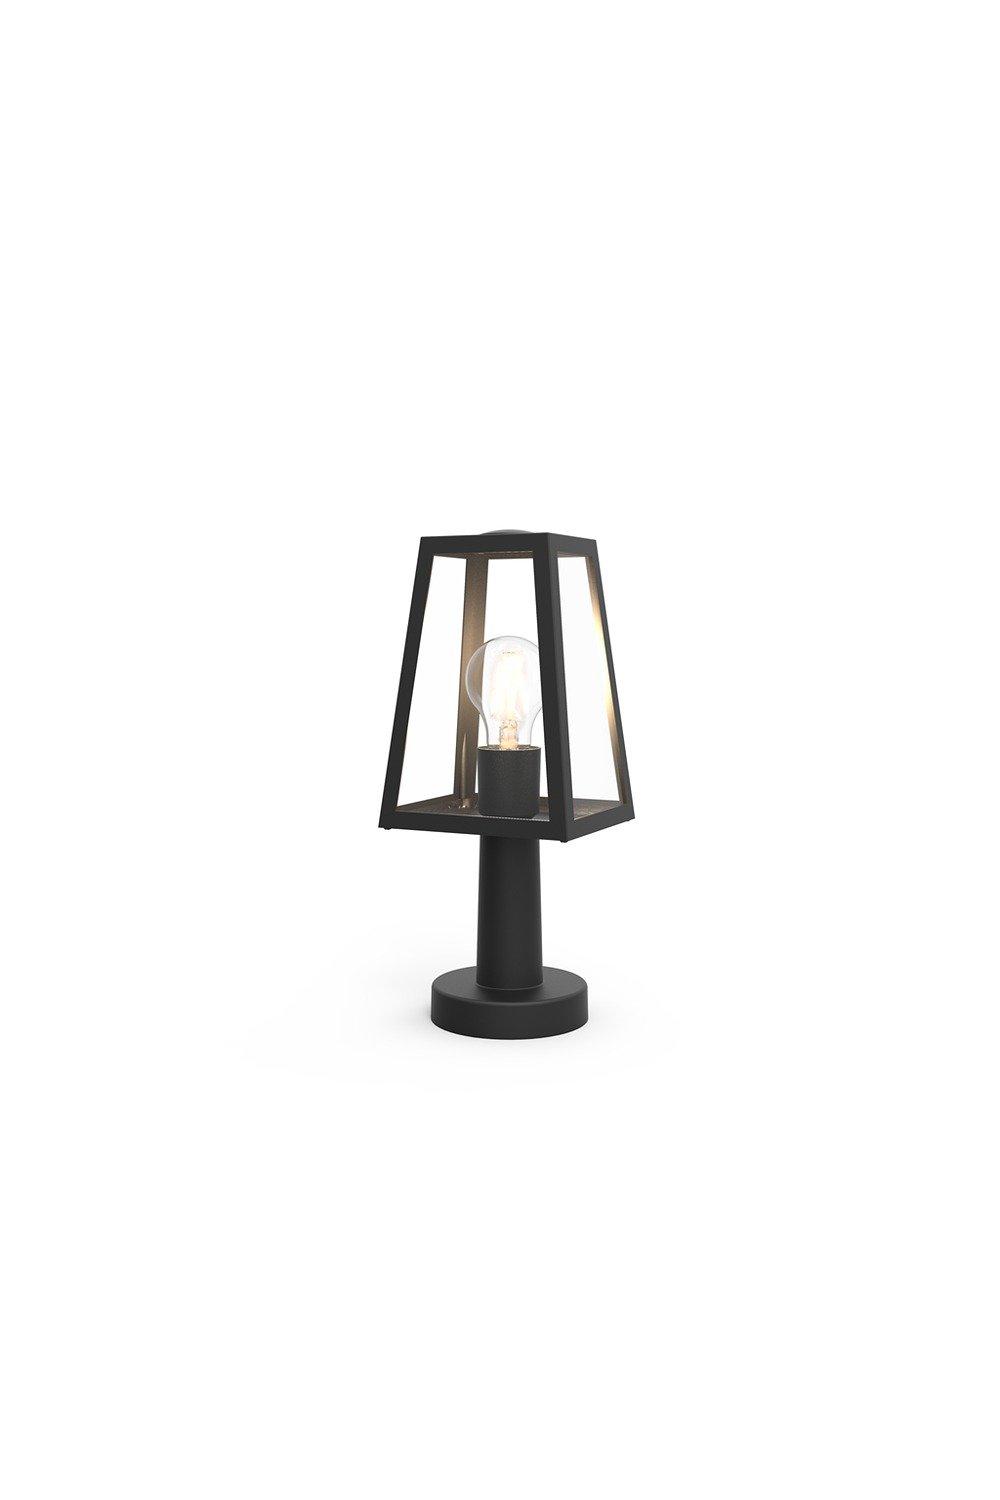 'Louie' Black Modern Outdoor Lantern Short Post Light